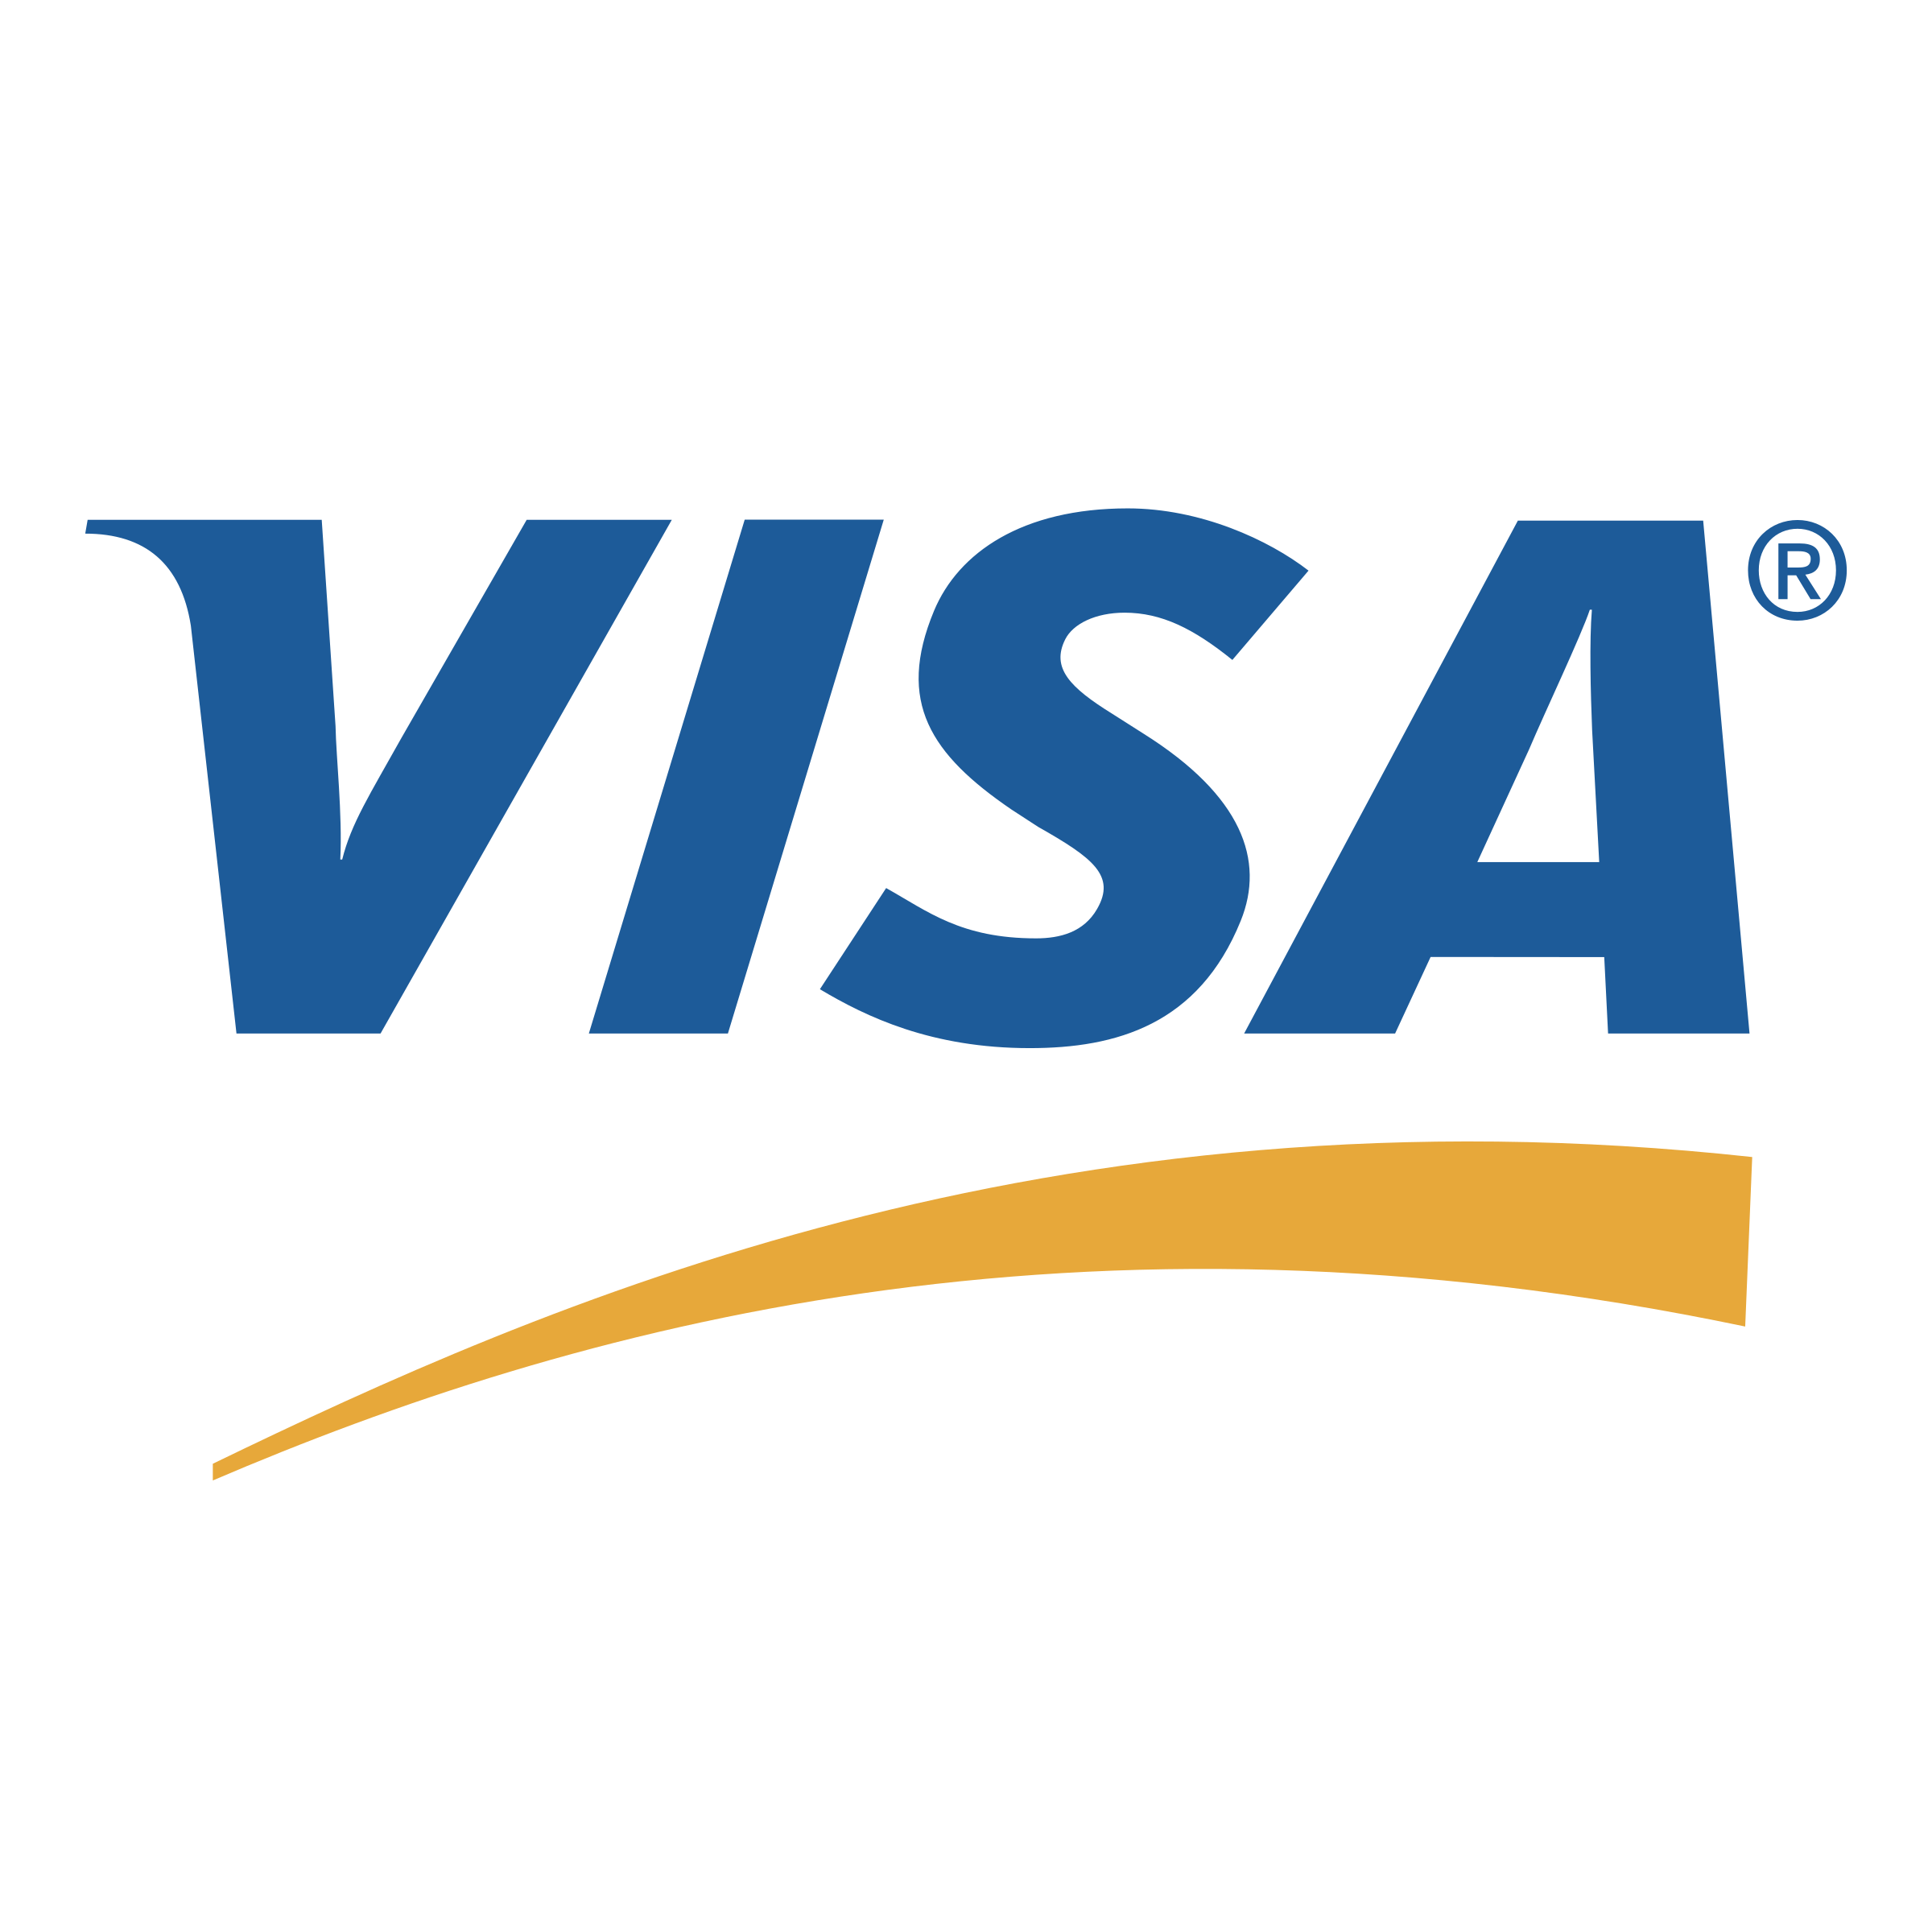 Credit Card Visa Mastercard D